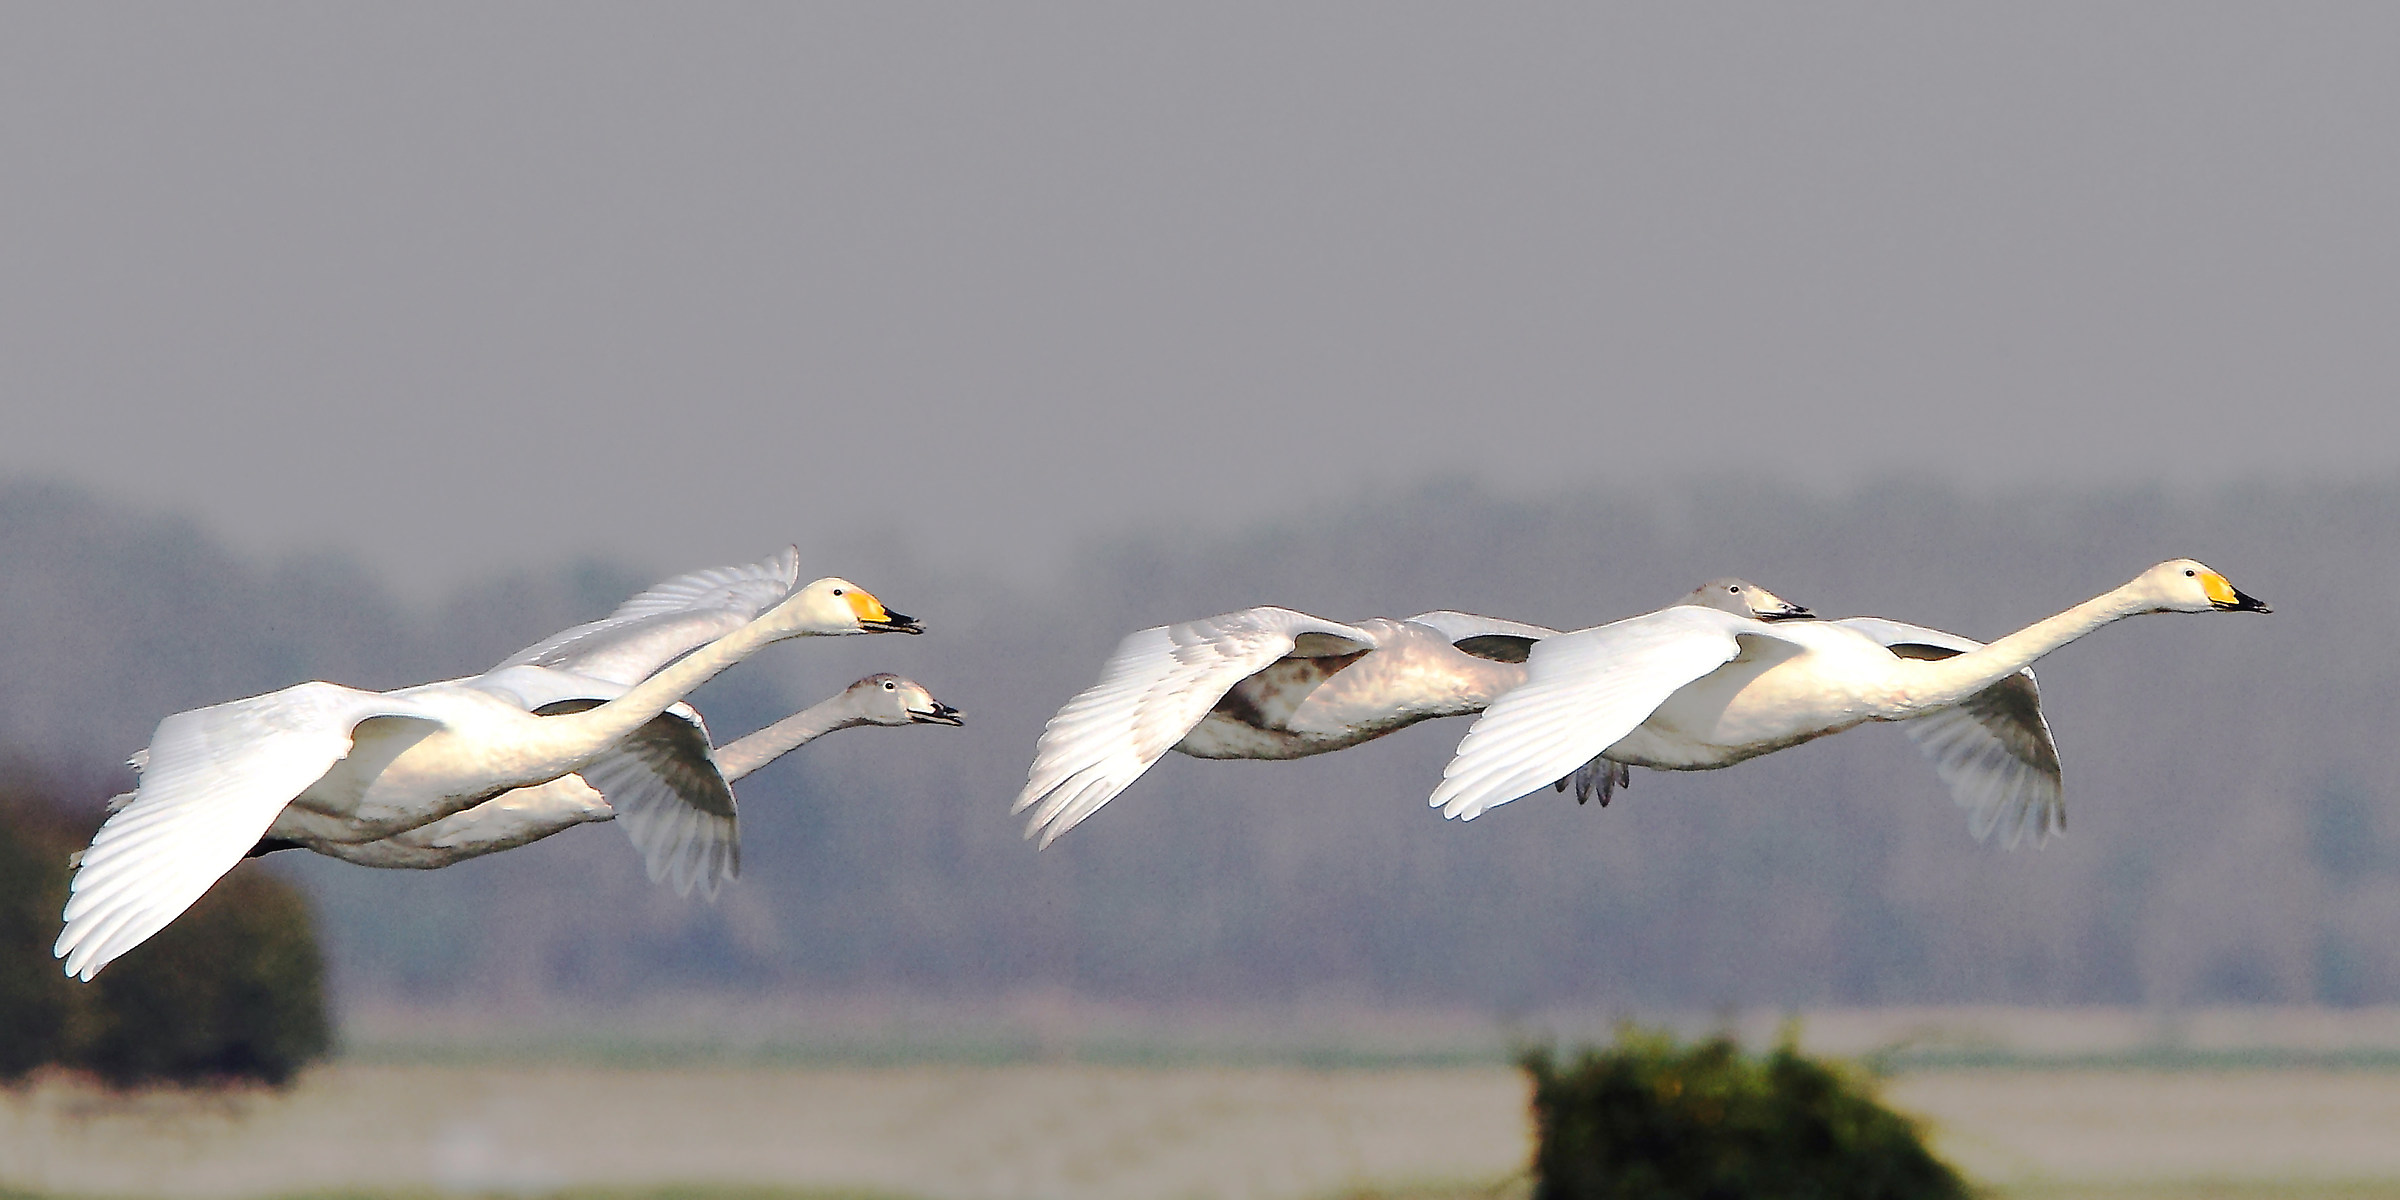 The flight of swans...